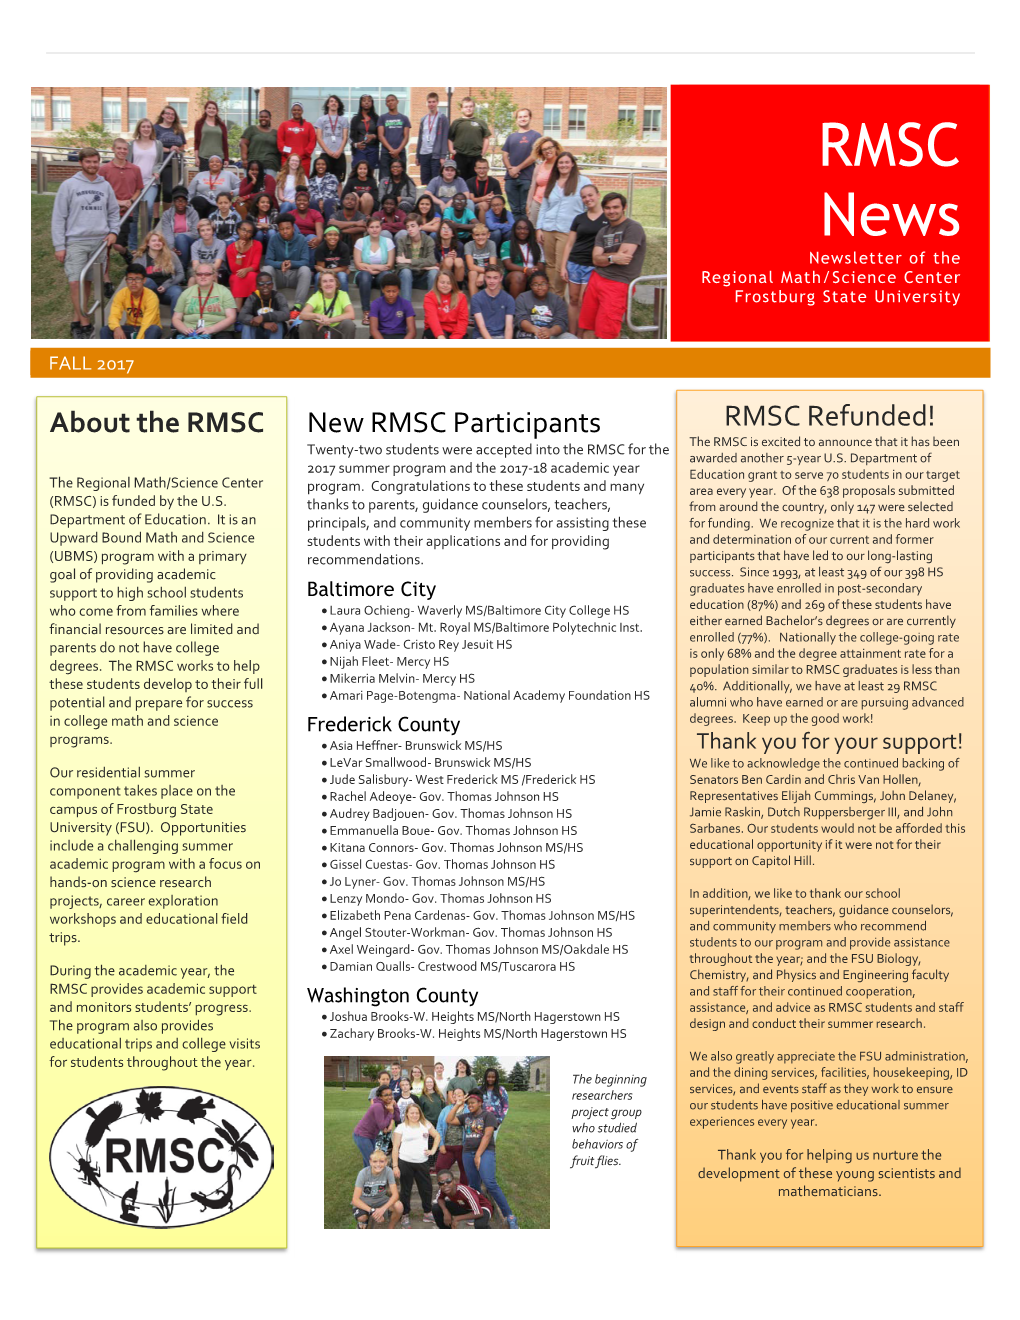 RMSC News Newsletter of the Regional Math/Science Center Frostburg State University